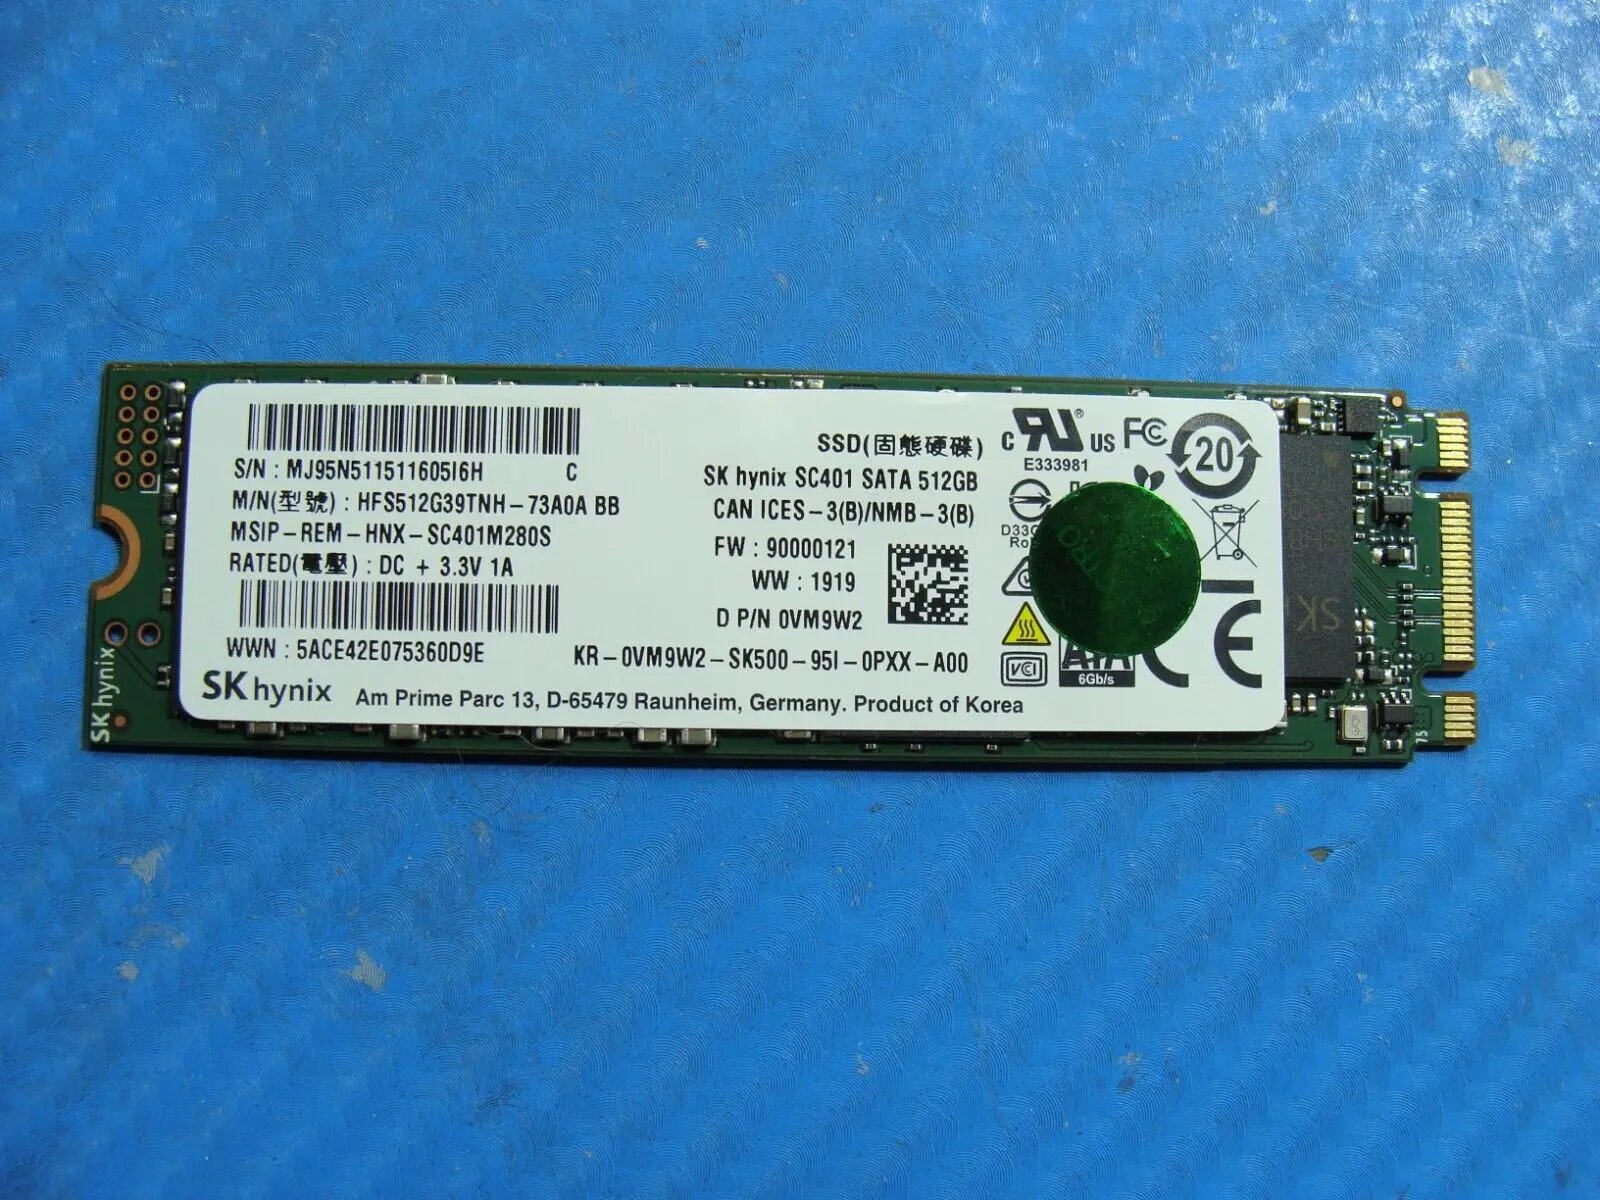 Dell 7490 SK Hynix 512GB SATA M.2 SSD Solid State Drive HFS512G39TNH-73A0A VM9W2